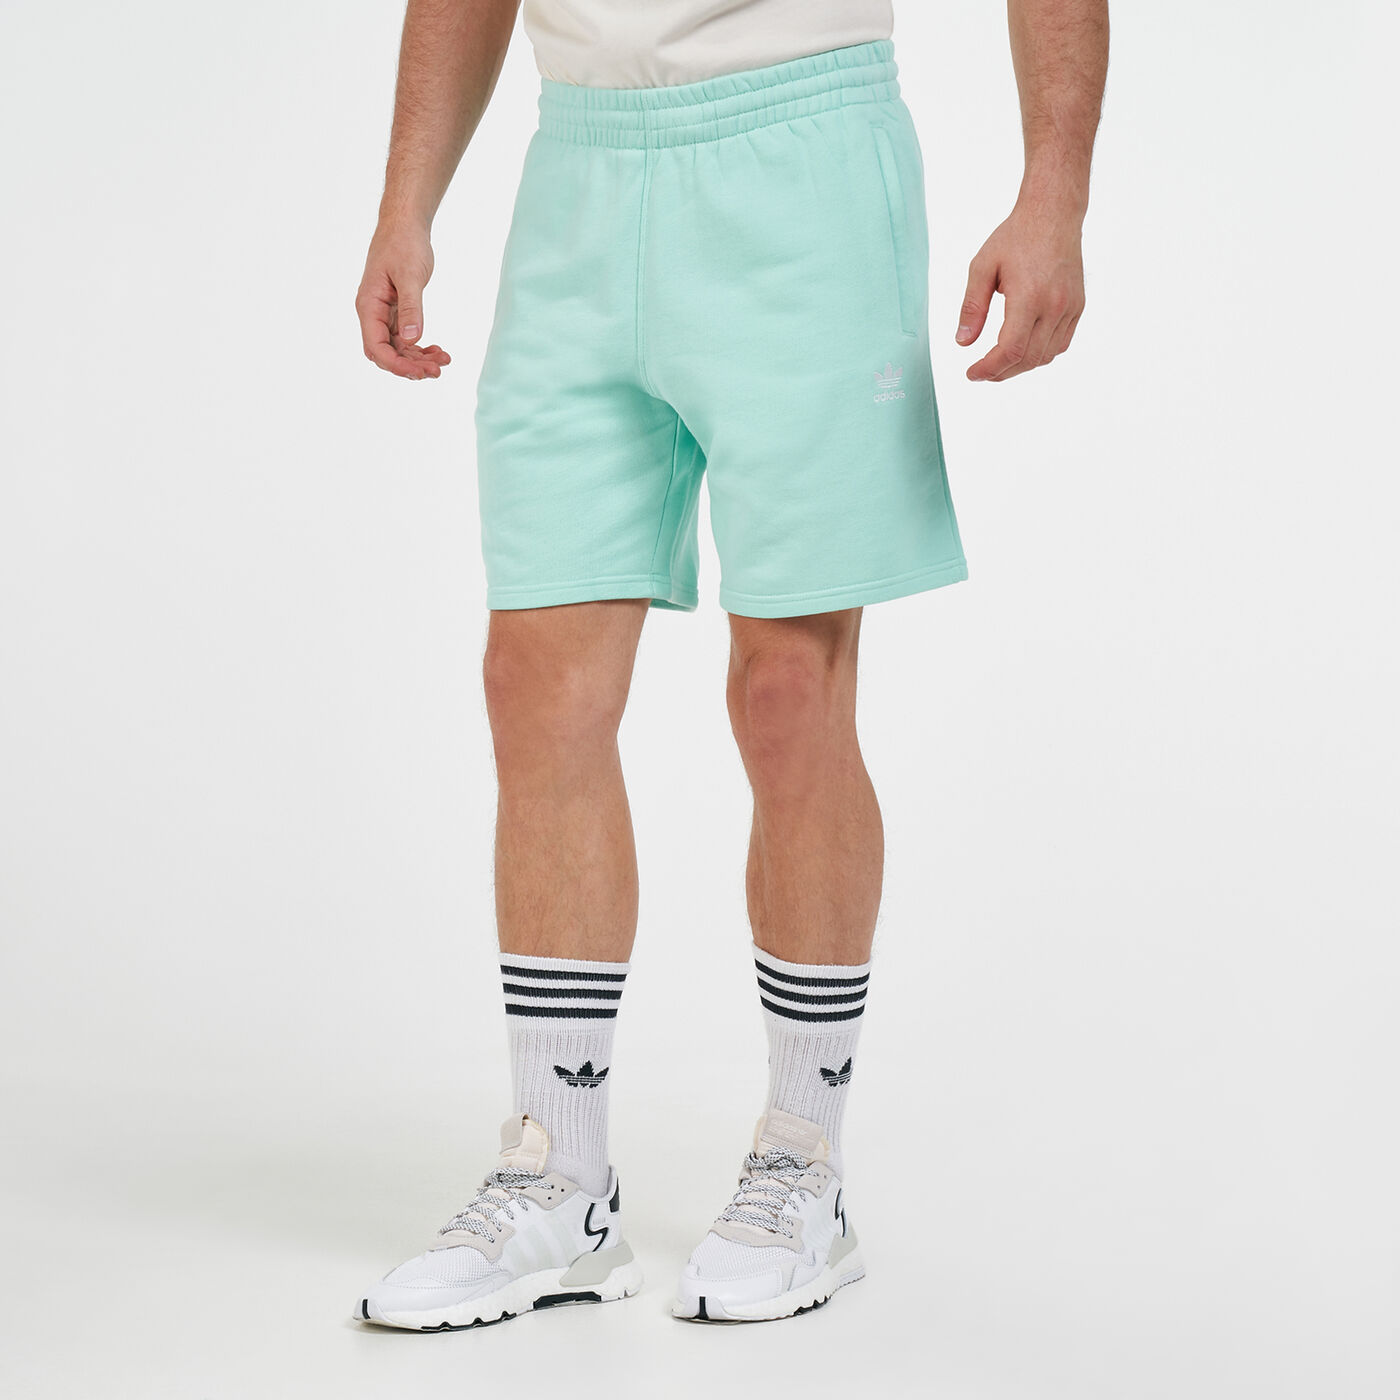 Men's Trefoil Essentials Shorts